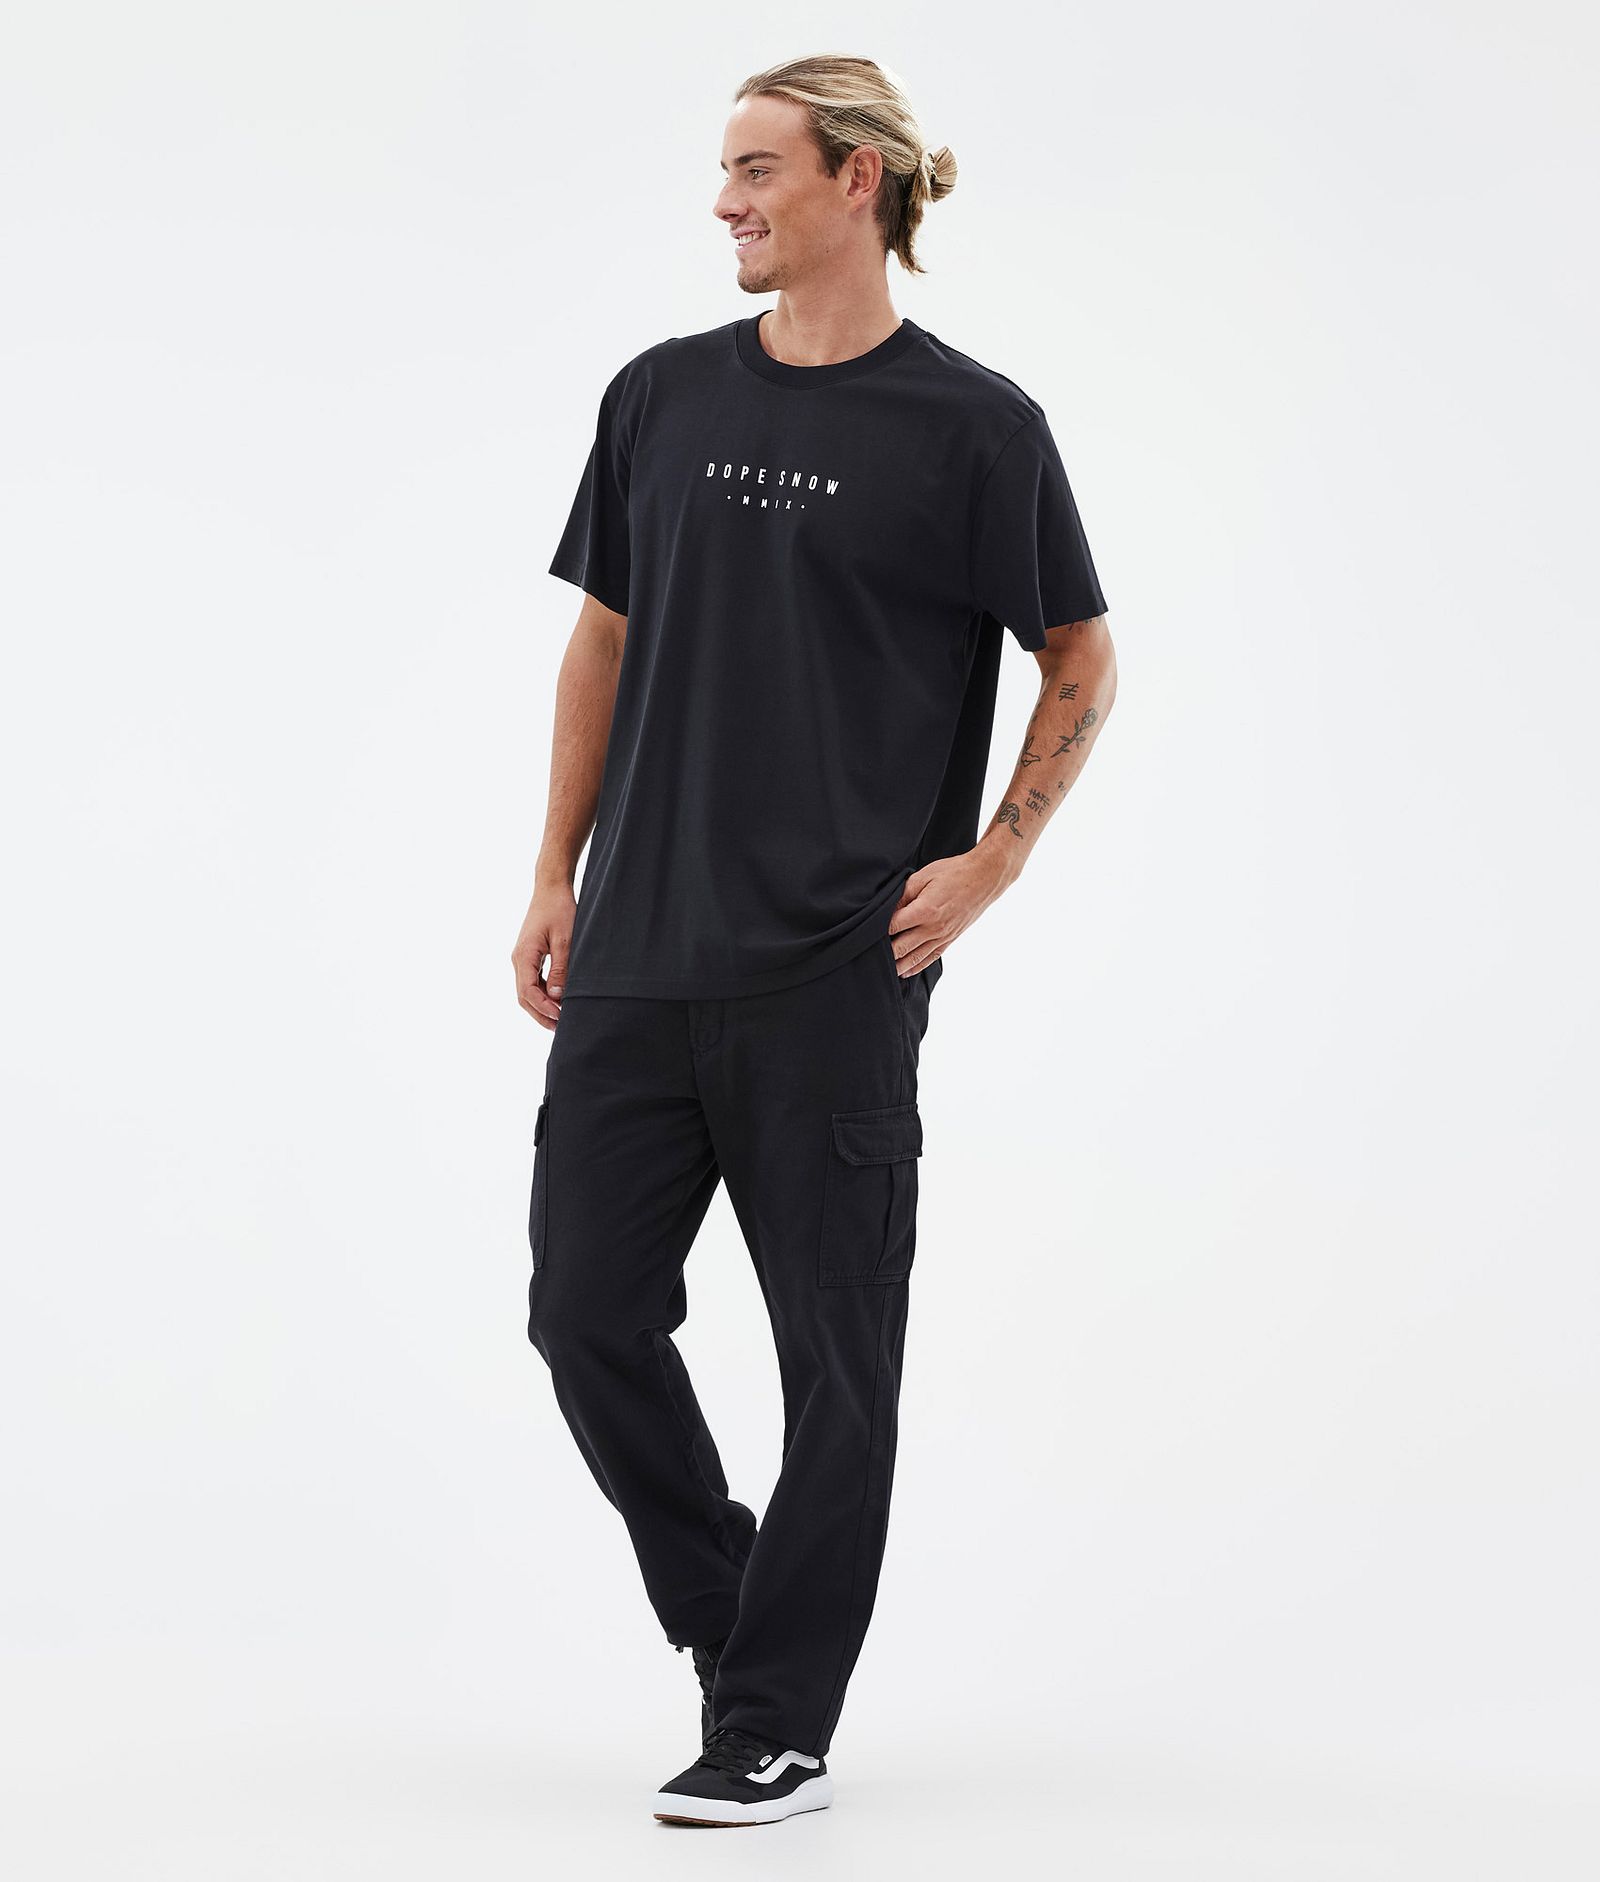 Dope Standard T-Shirt Herren Silhouette Black